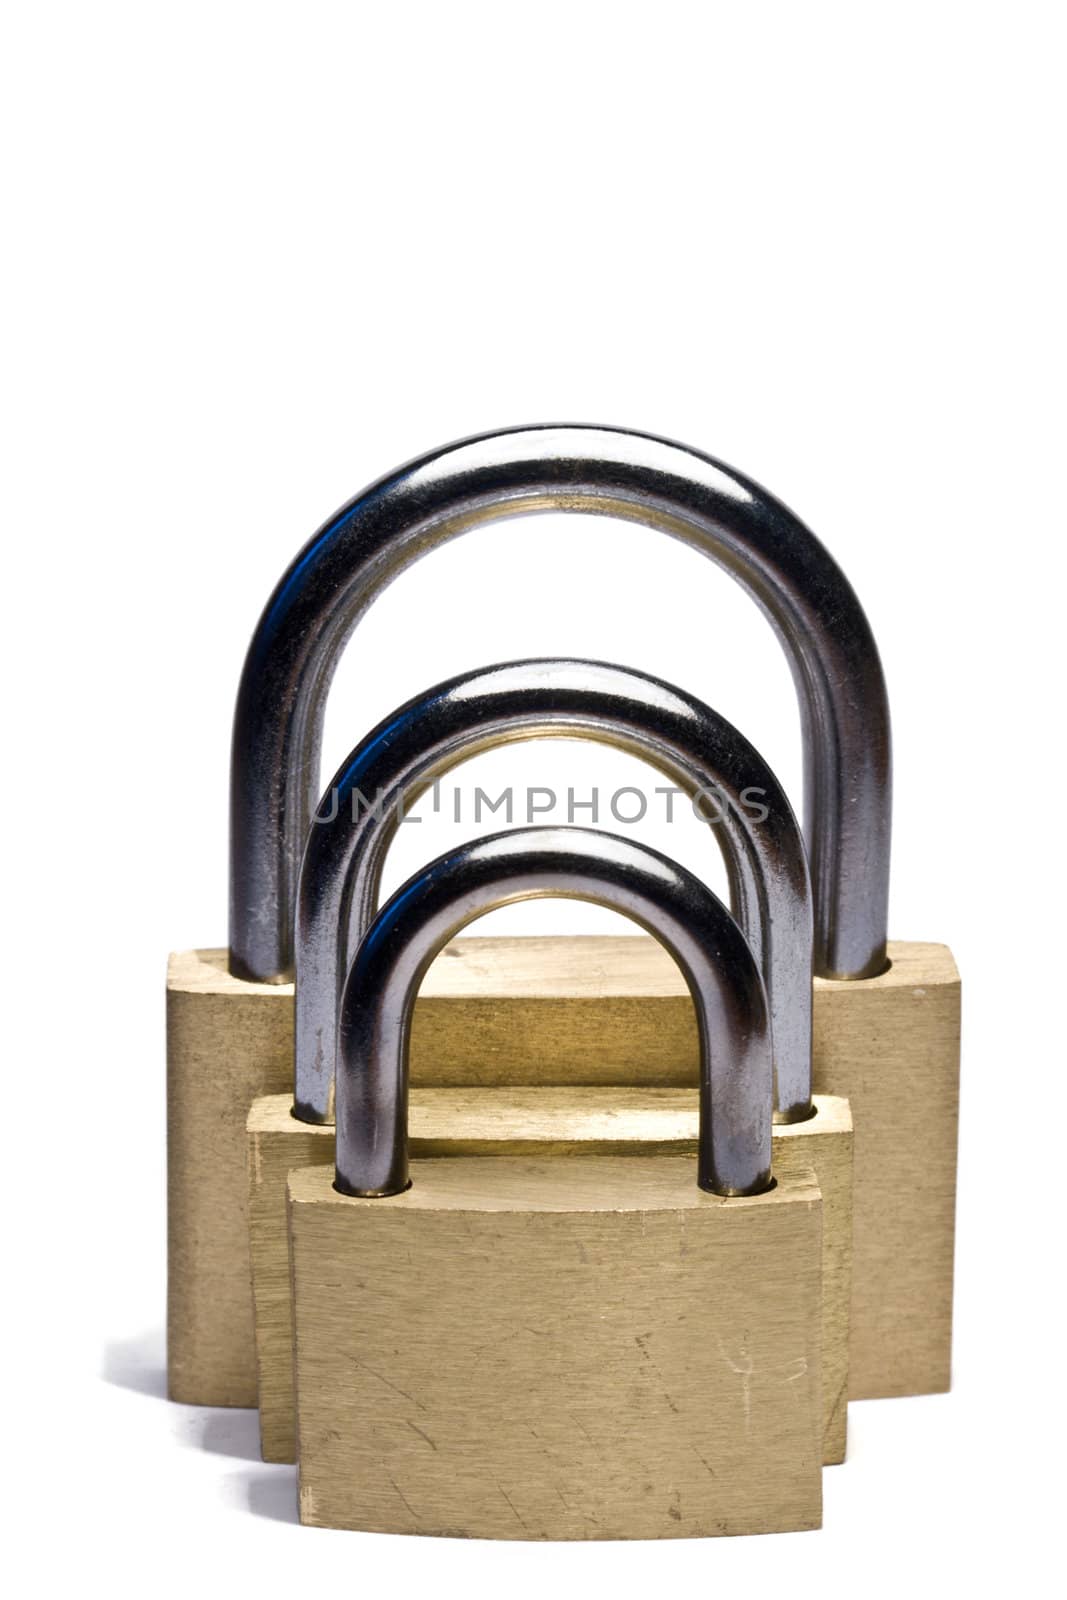 Three padlocks of different size by dimol